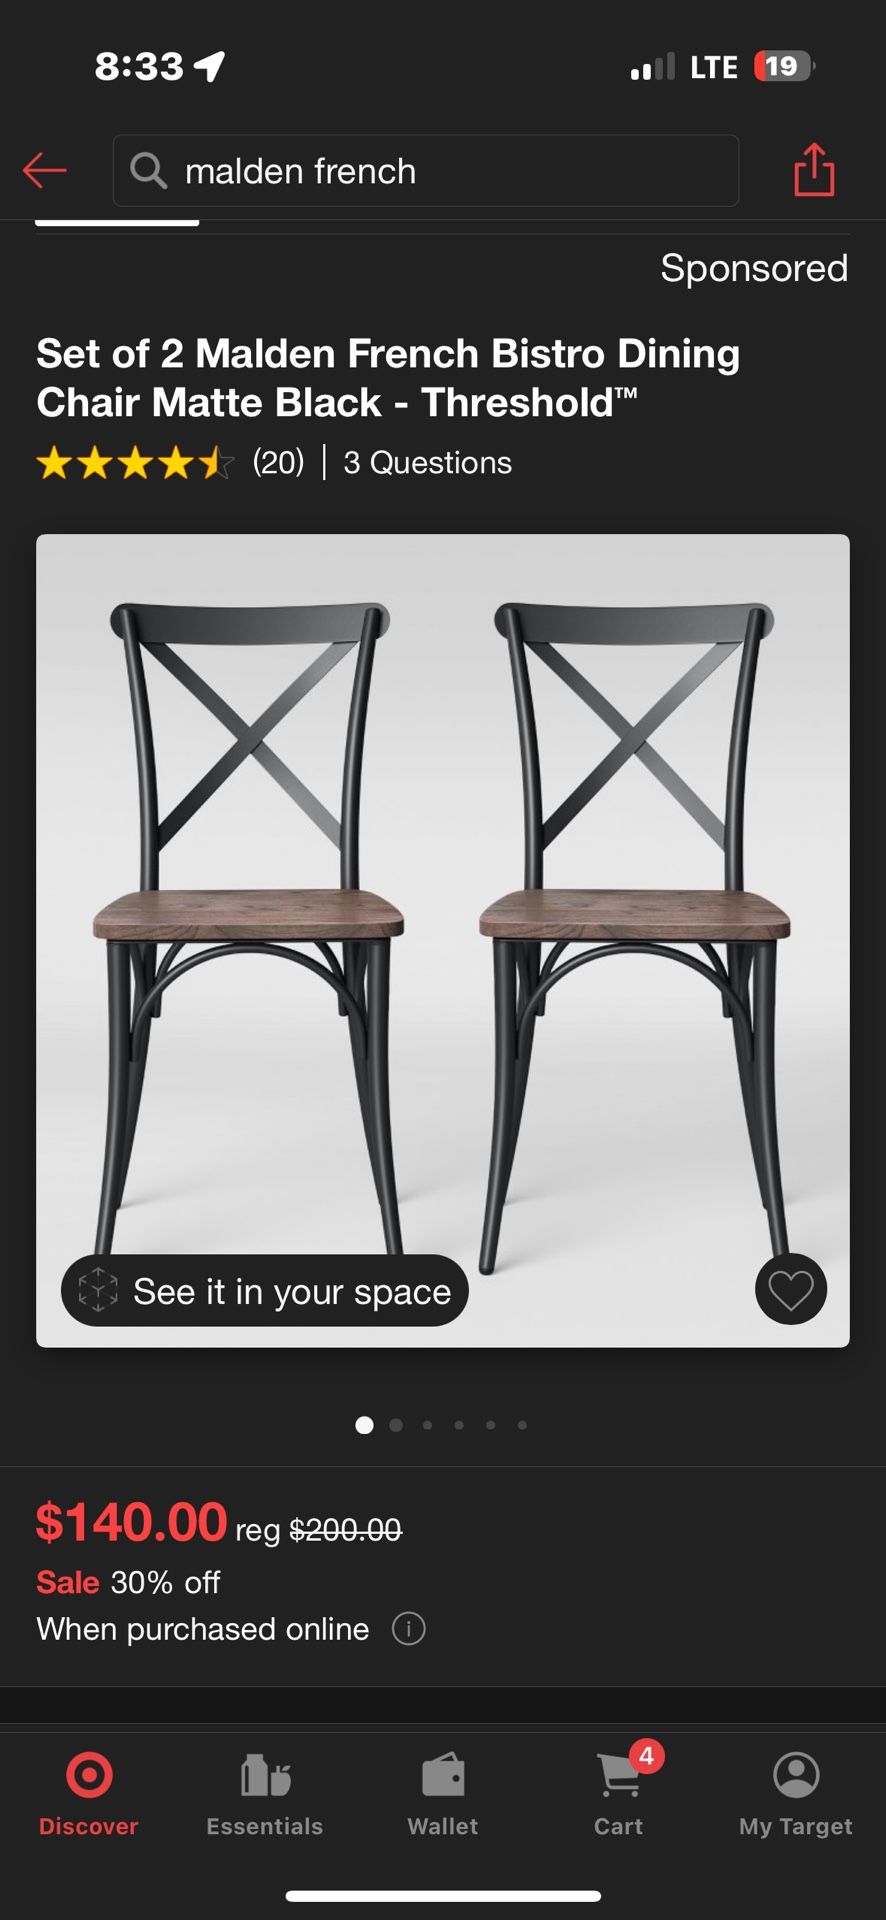 Set of 4 Malden French Bistro Dining Chair Matte Black - Threshold™